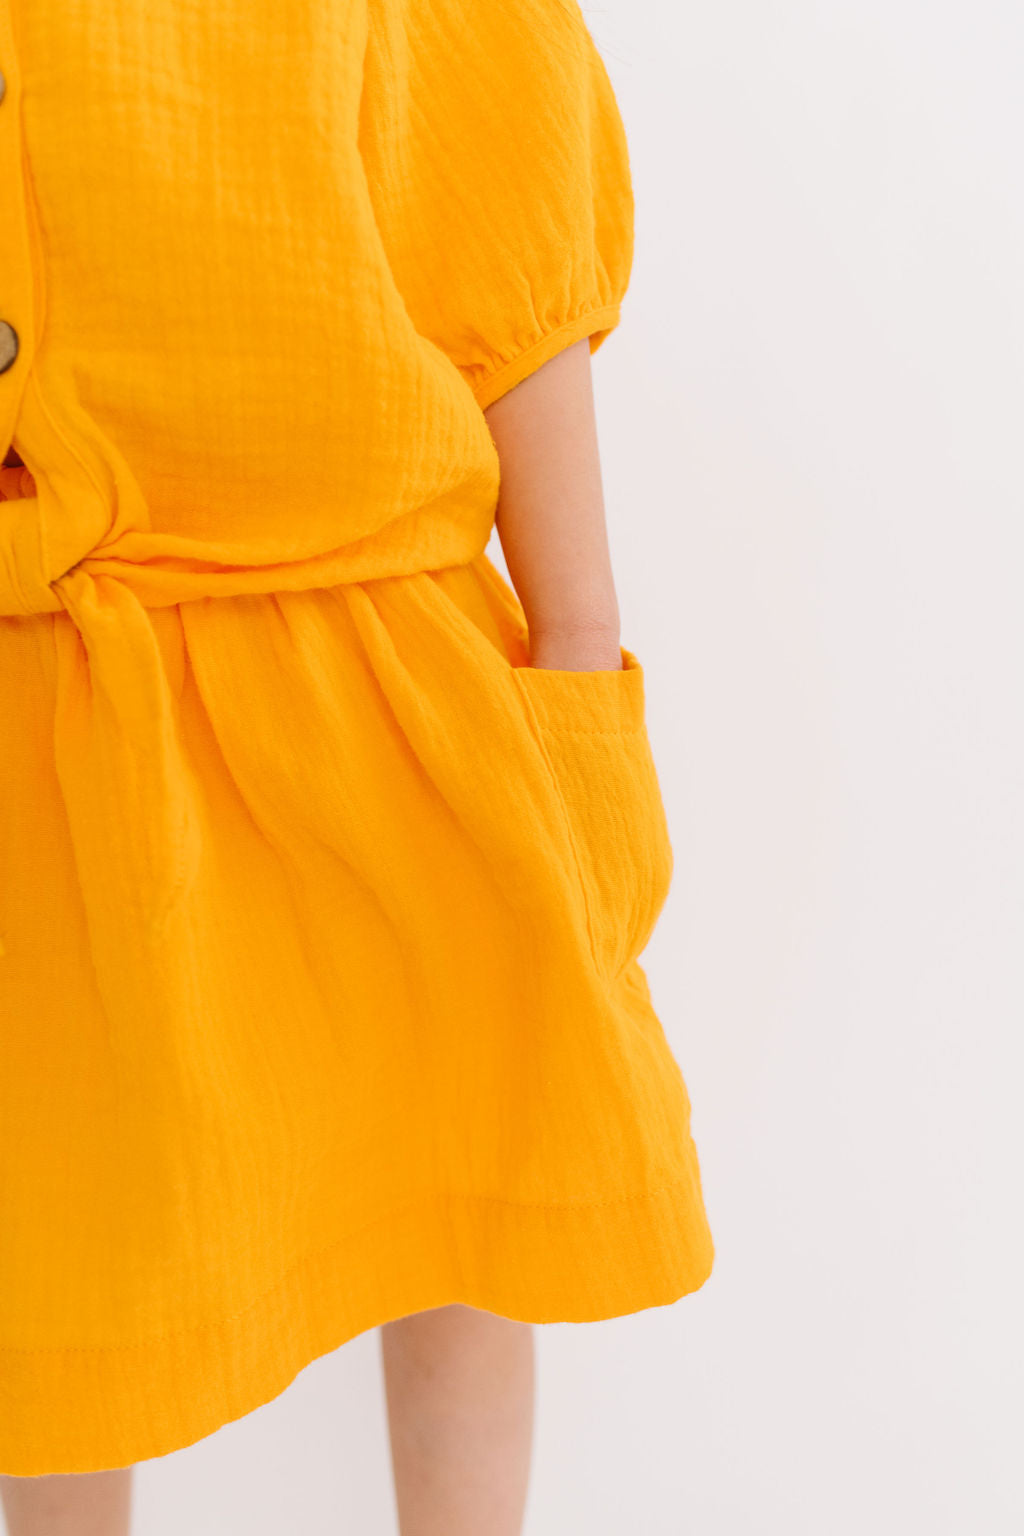 Pocket Skirt in Marigold